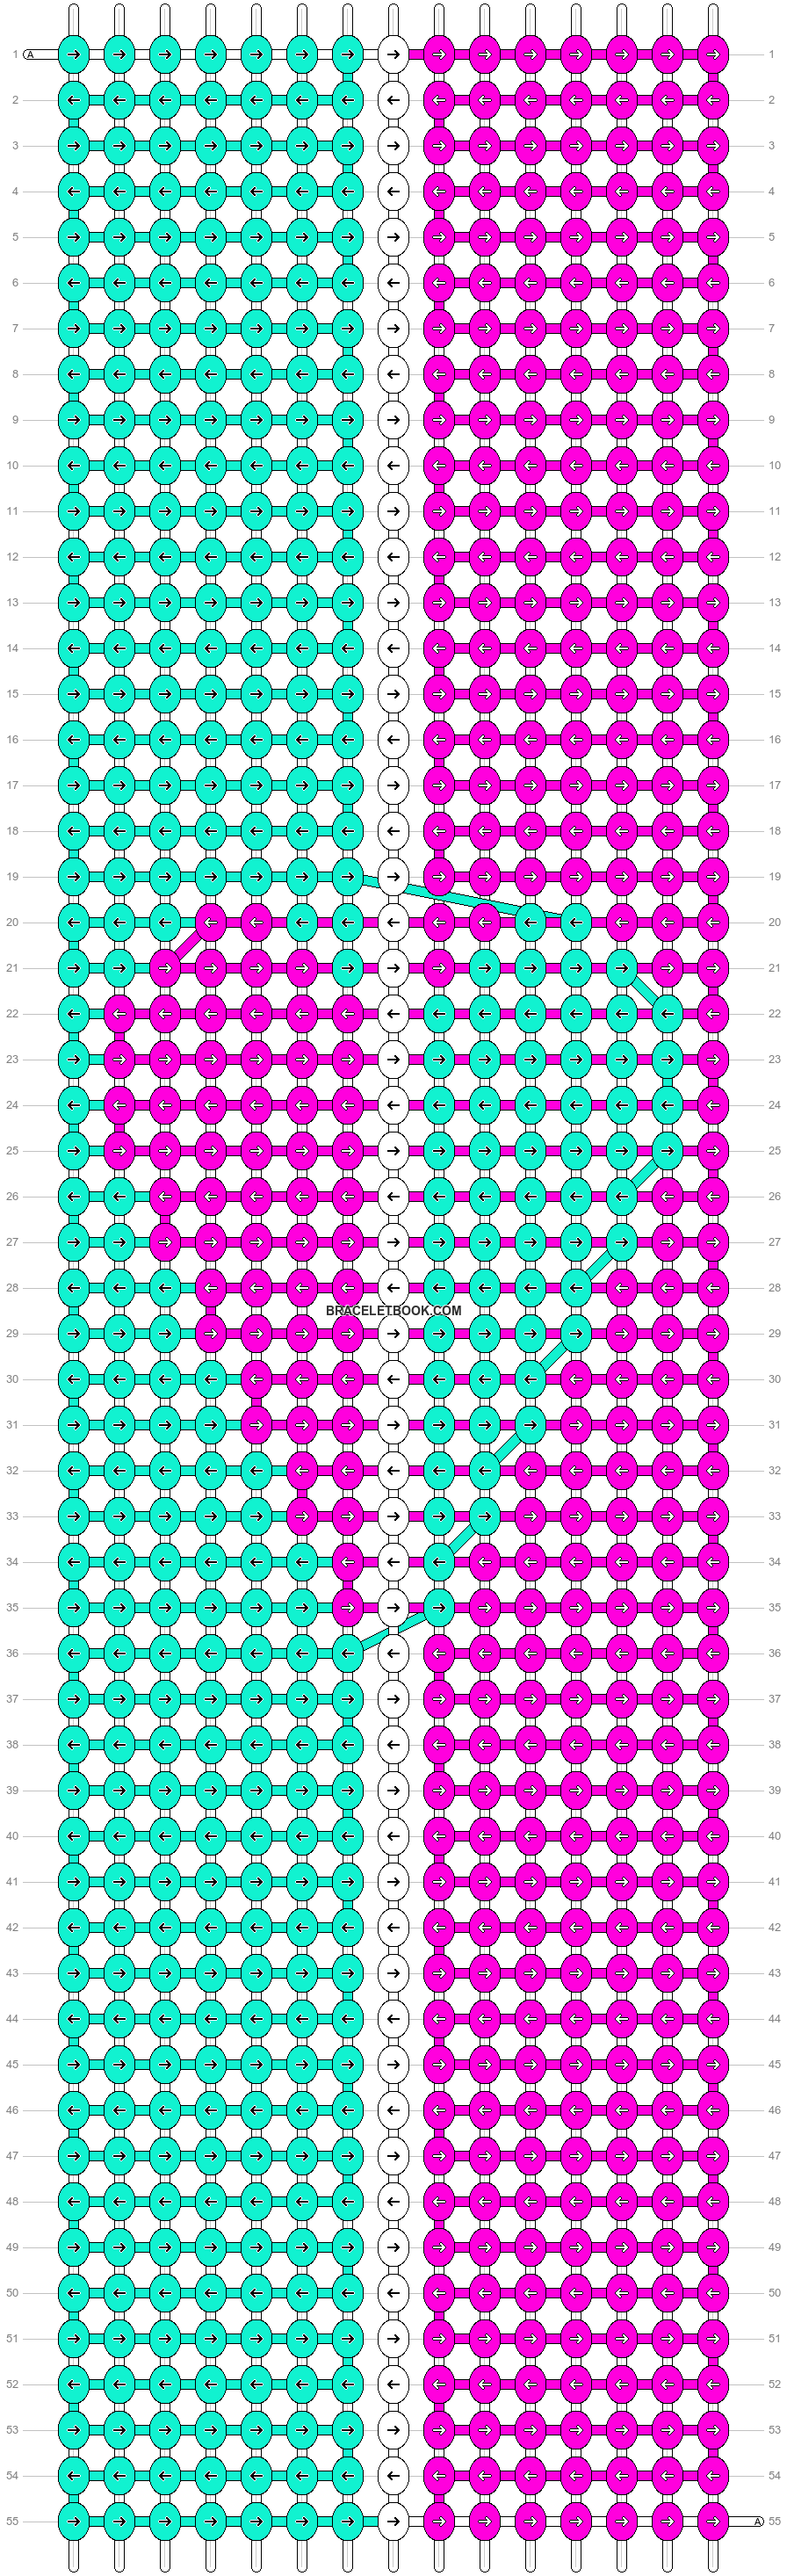 Alpha pattern #75126 variation #144018 pattern